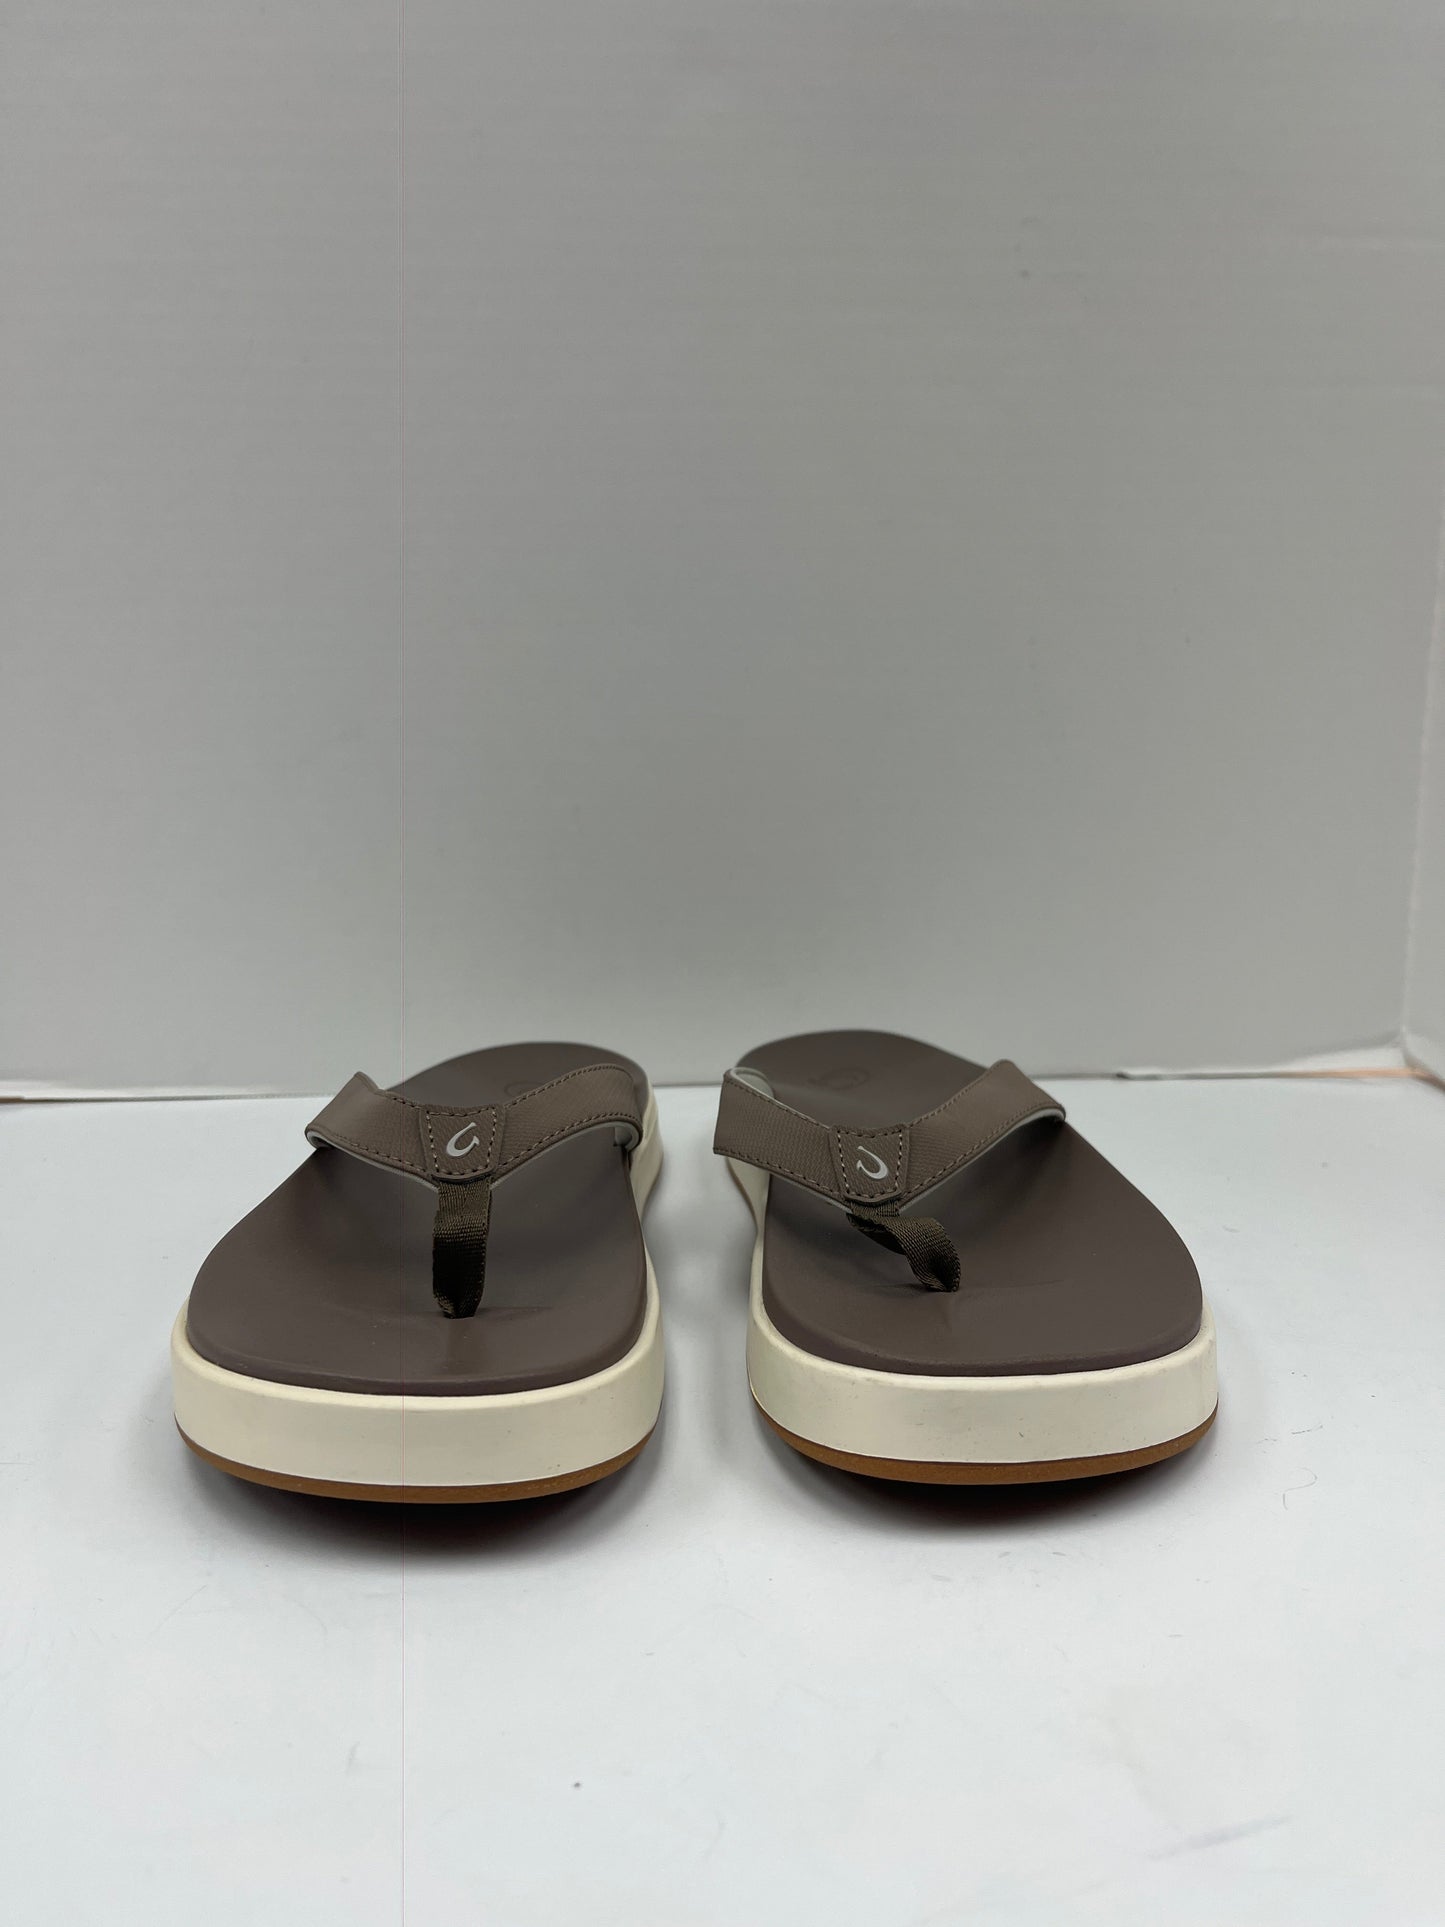 Sandals Flip Flops By Cmb  Size: 8